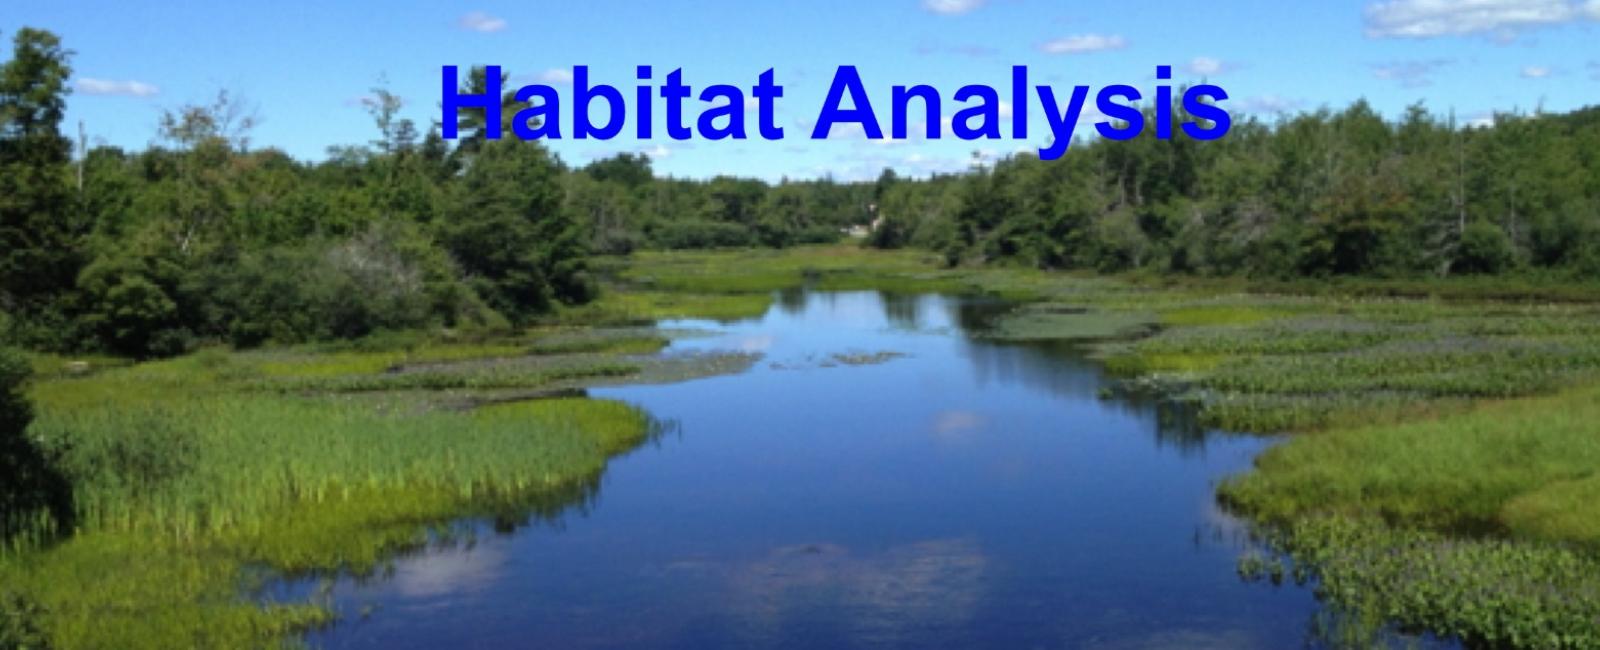 Habitat Analysis - stream through a bog